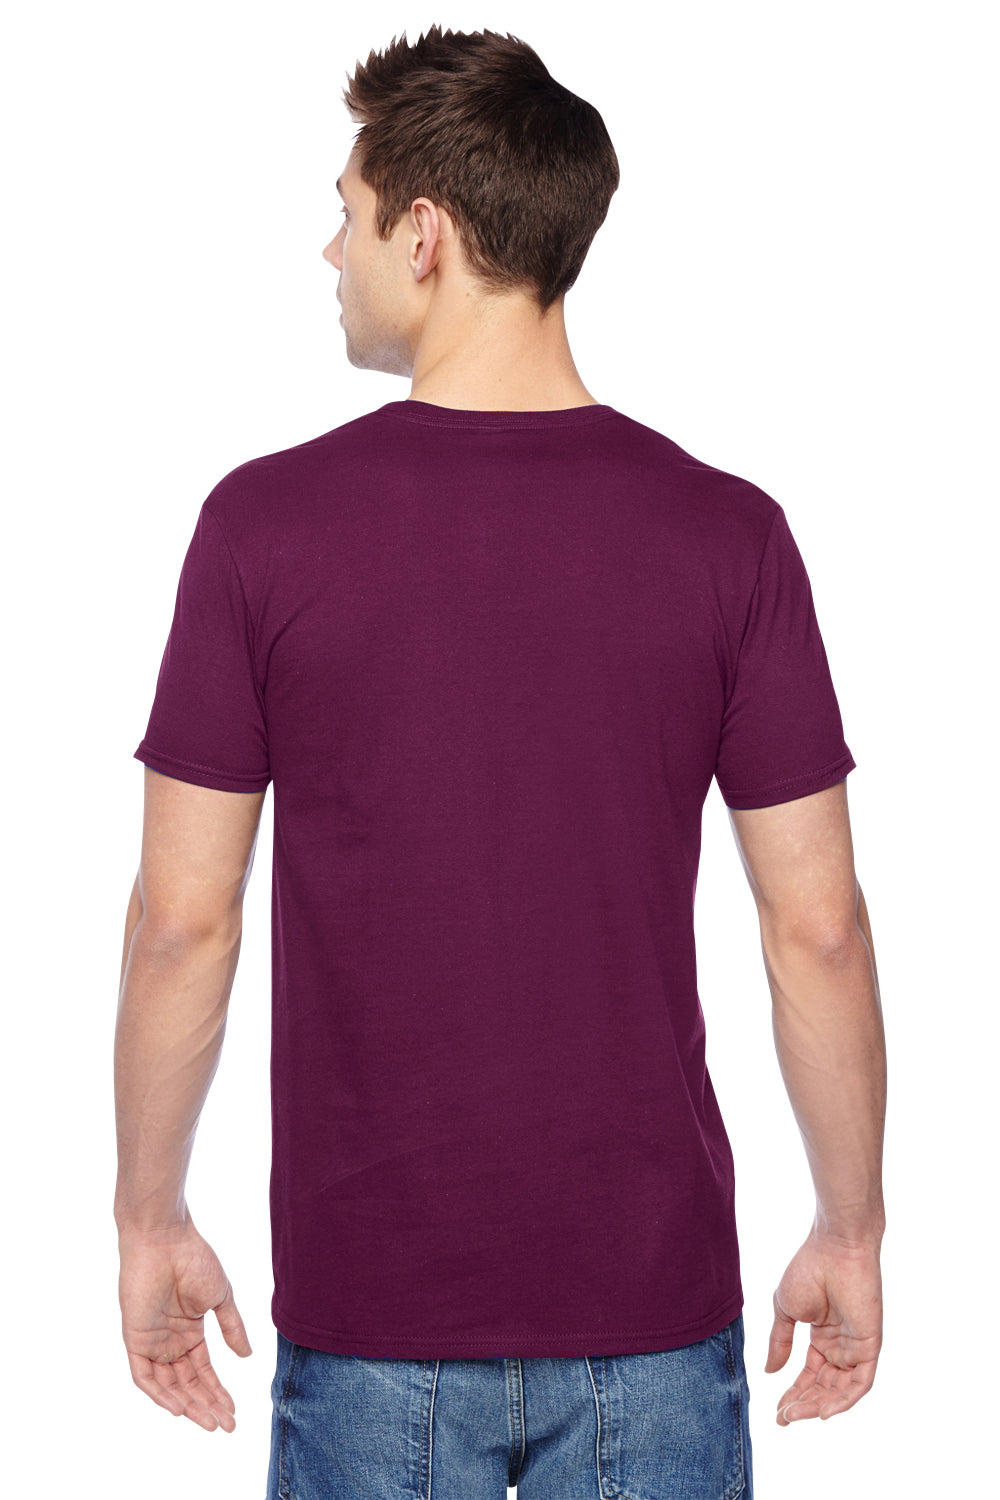 Fruit Of The Loom SF45R Mens Sofspun Jersey Short Sleeve Crewneck T-Shirt Wild Plum Purple Back